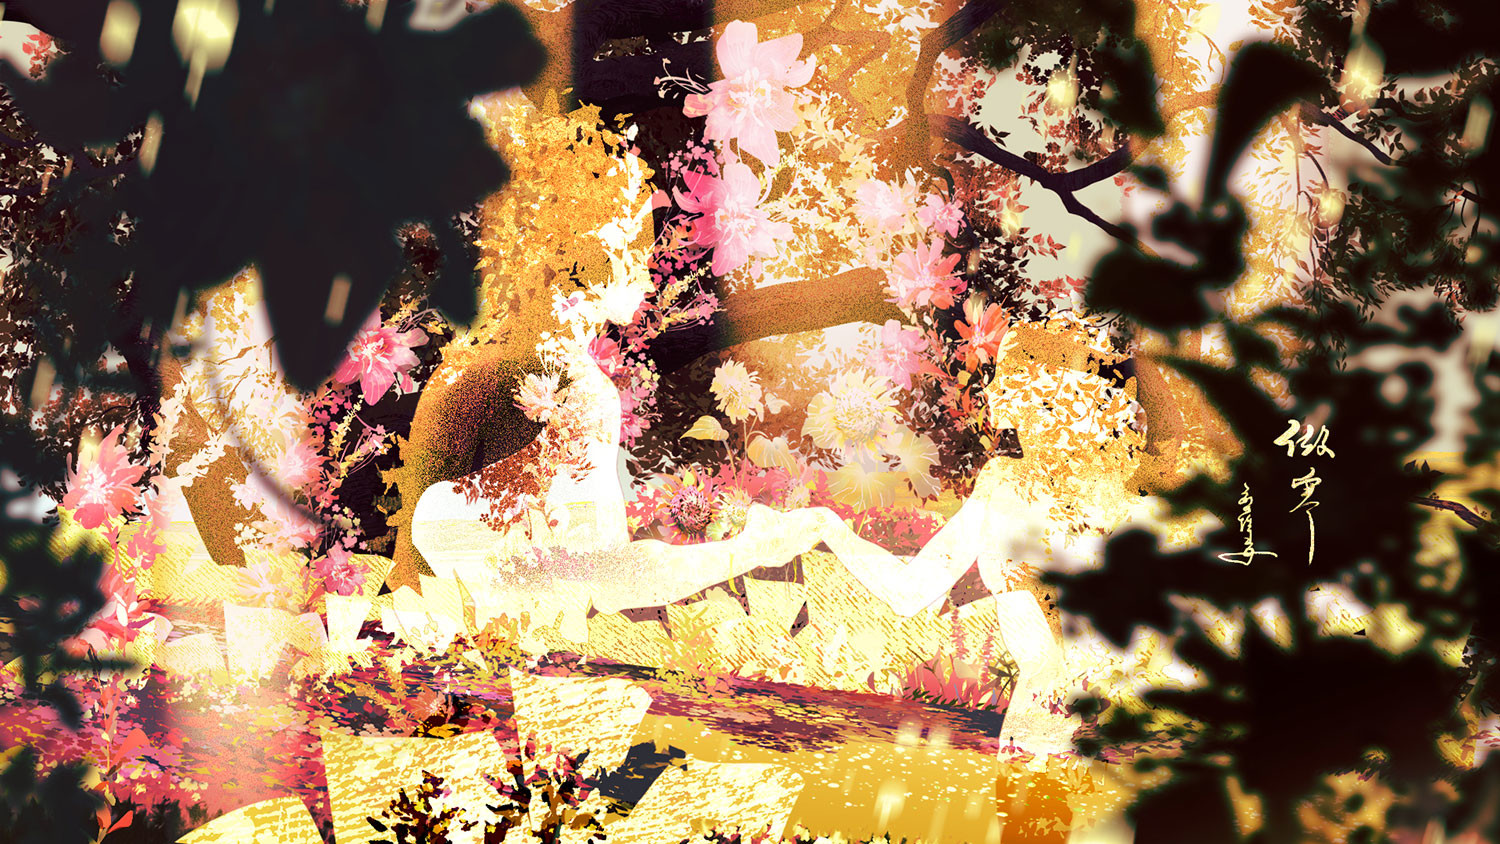 Watermother Jian Digital Art Fantasy Art Forest Flowers Surreal 1500x844